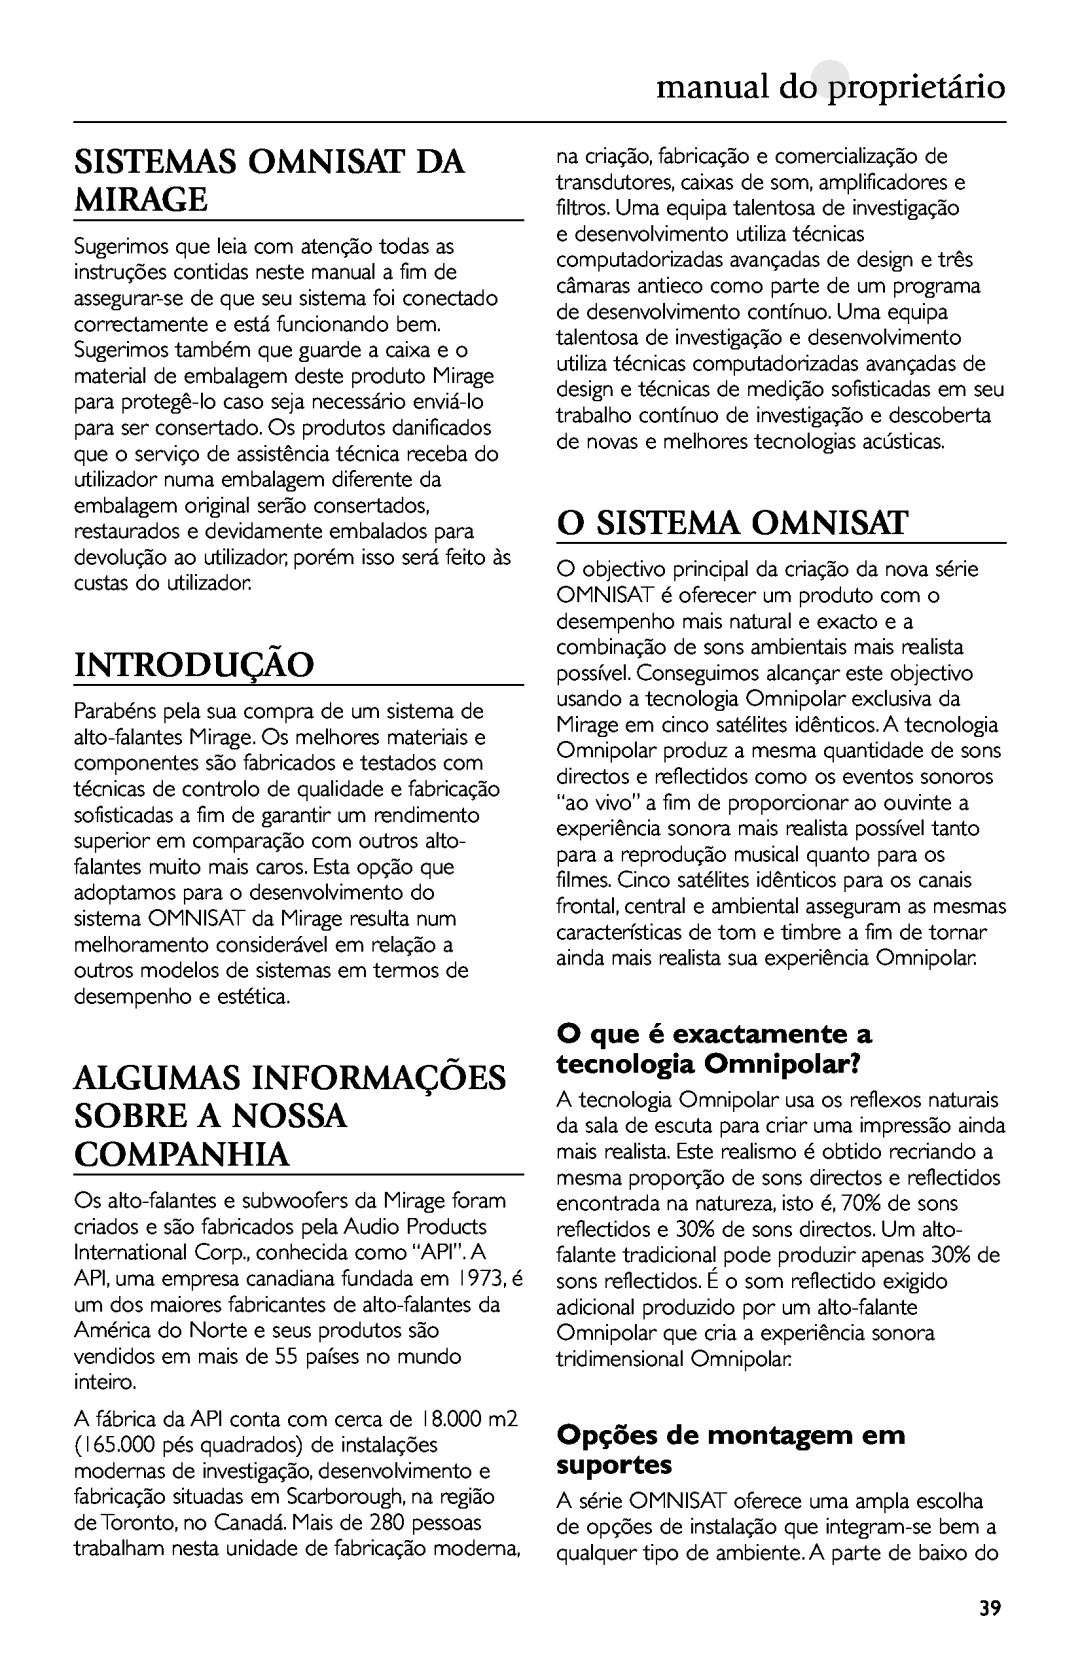 Mirage Loudspeakers owner manual manual do proprietário, Sistemas Omnisat Da Mirage, Introdução, O Sistema Omnisat 